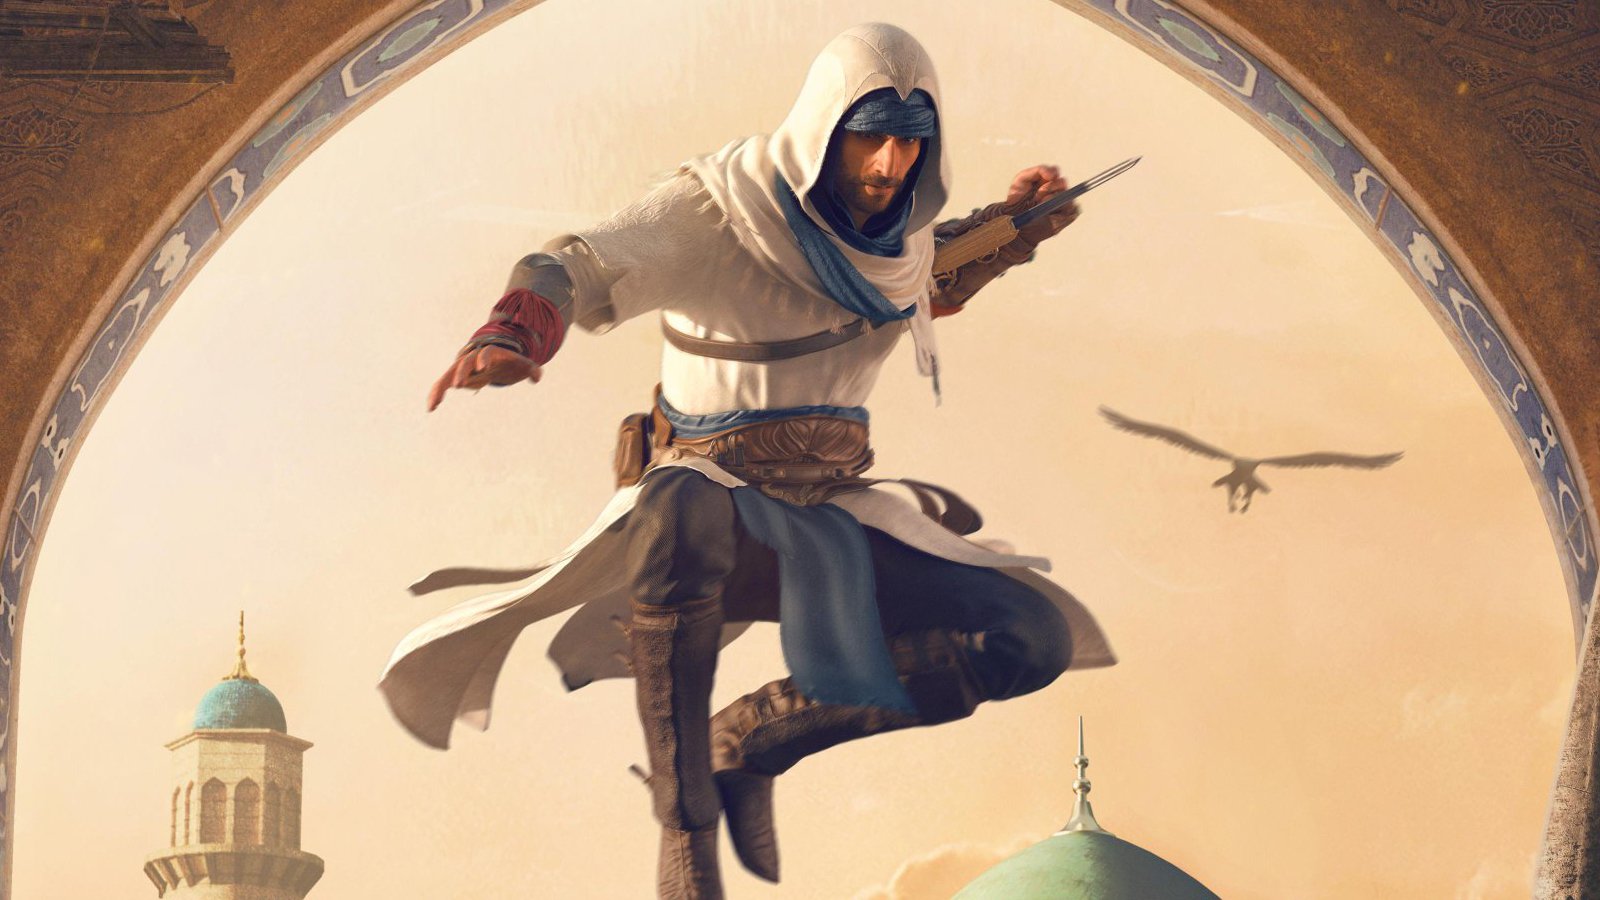 Assassins Creed Mirage 4